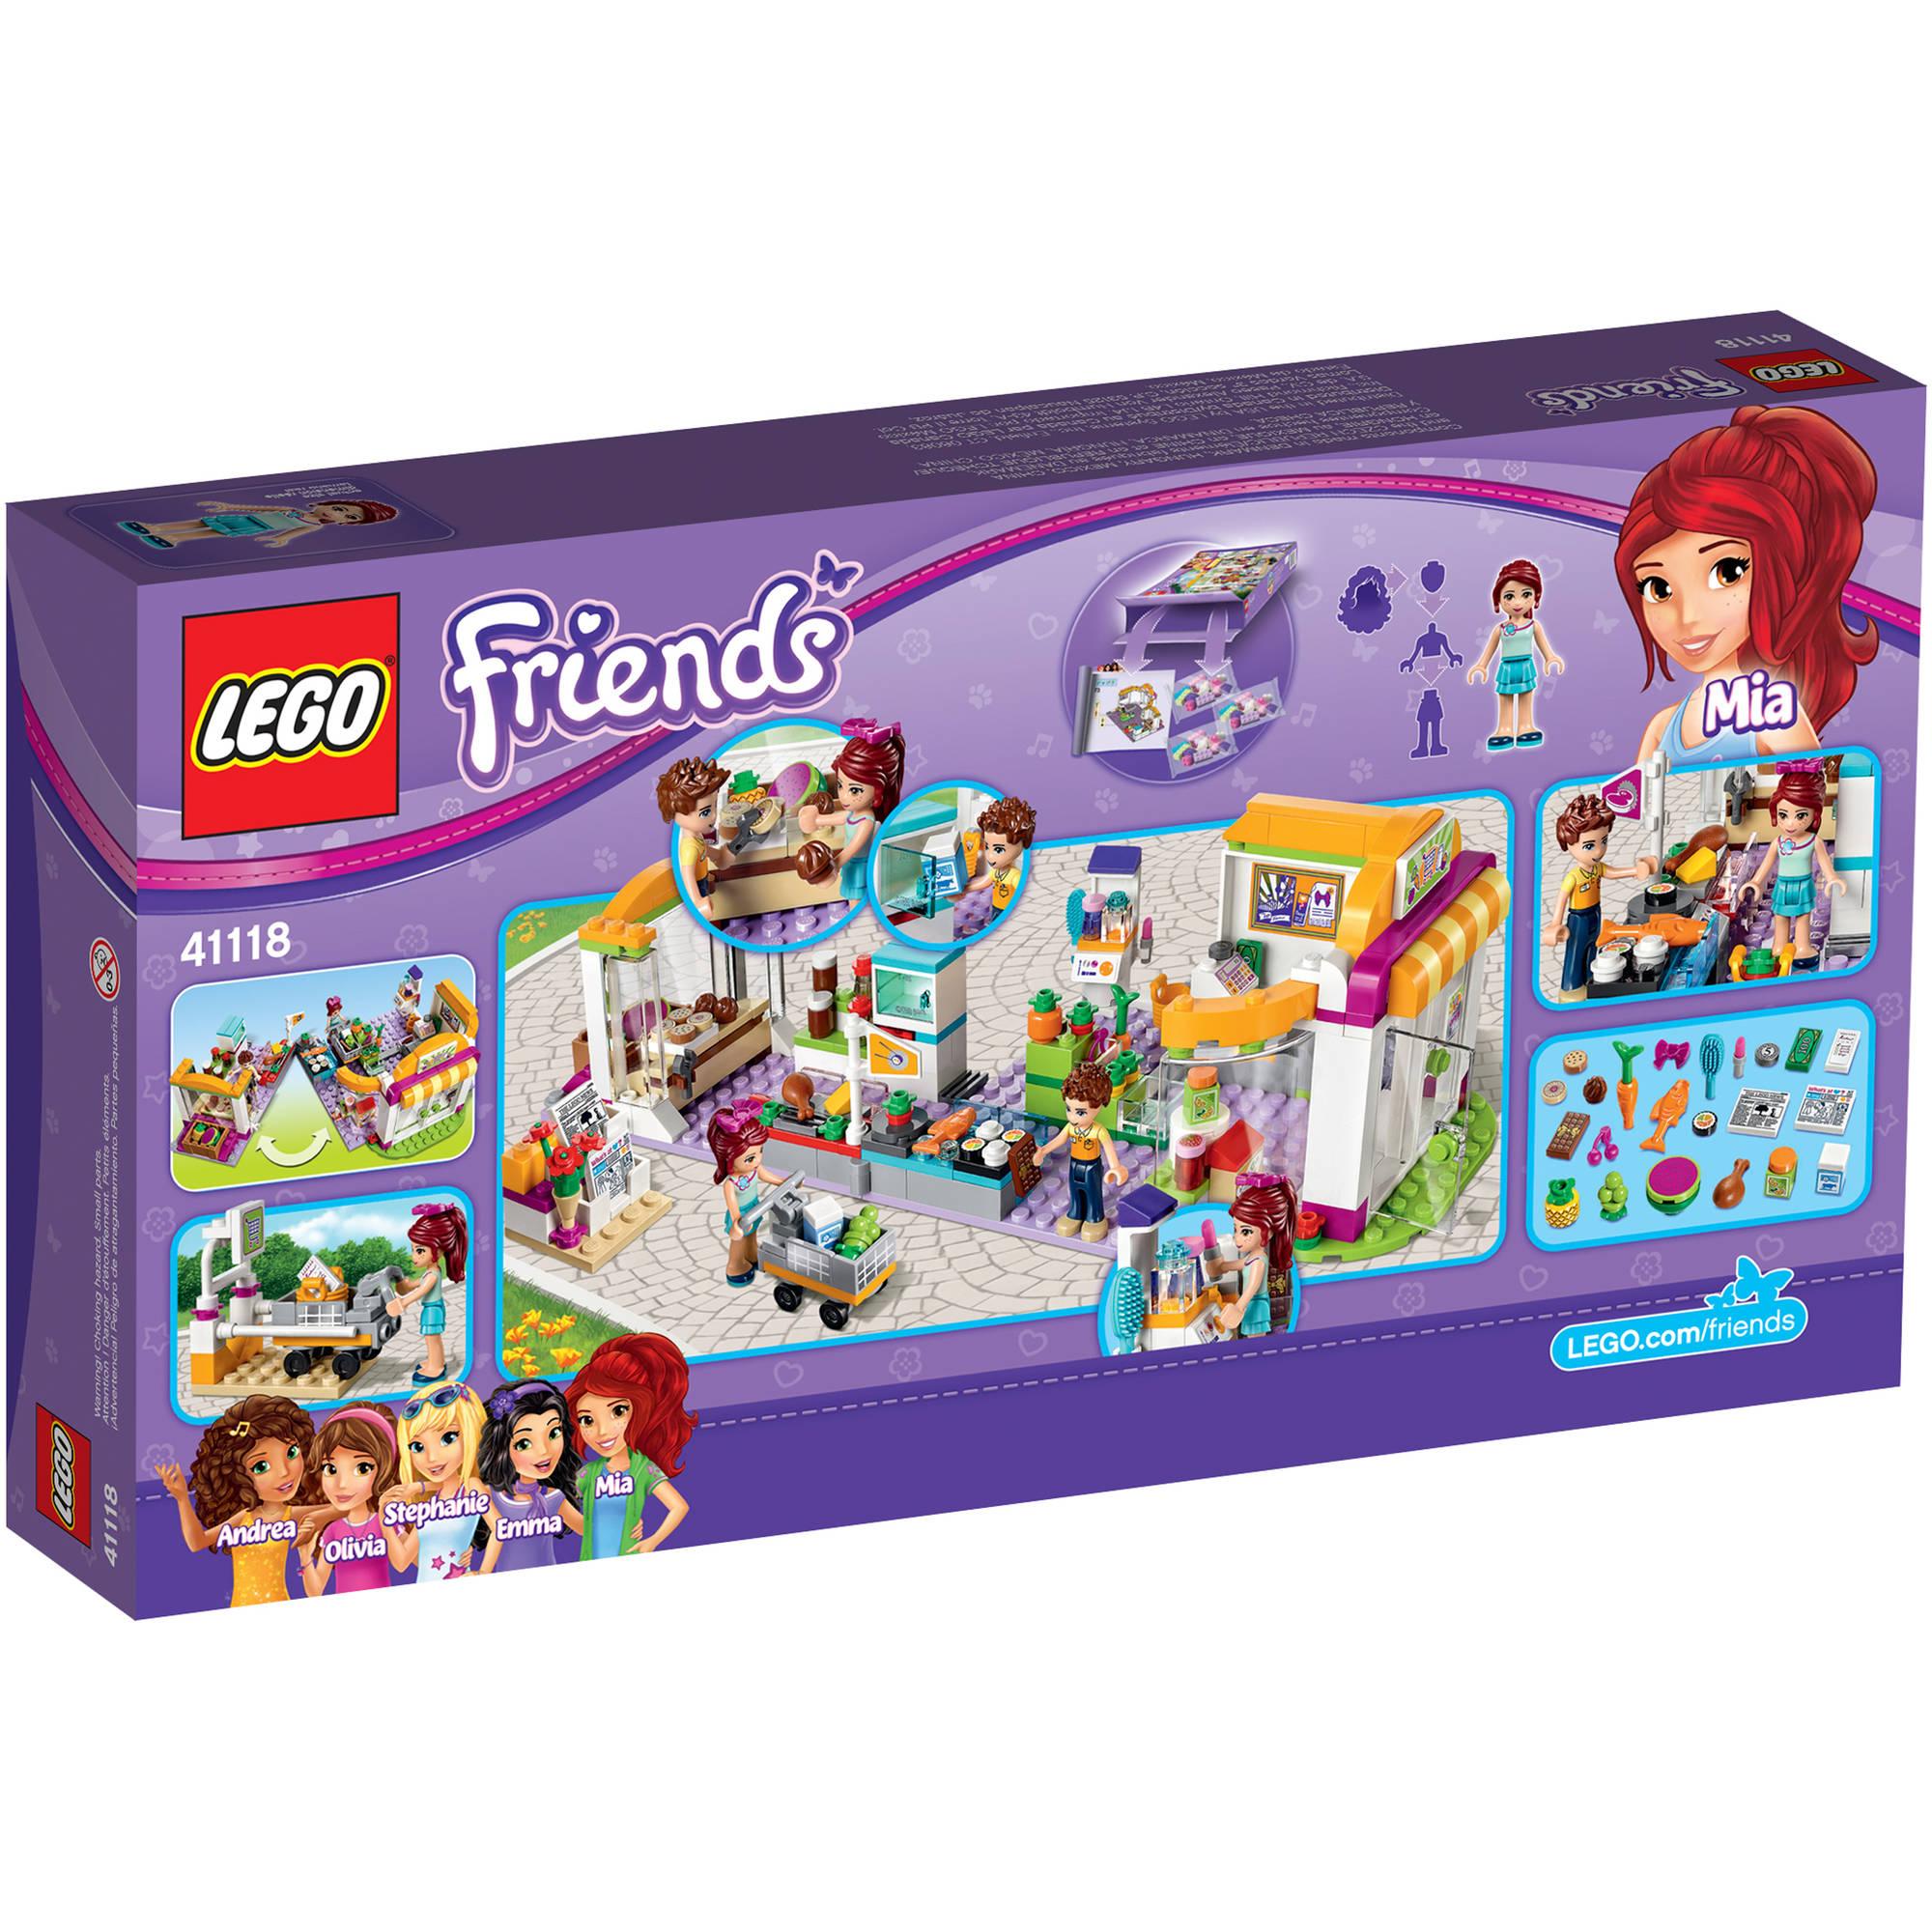 Đồ chơi Lego Friends Heartlake Supermarket 41118 – Siêu thị Heartlake